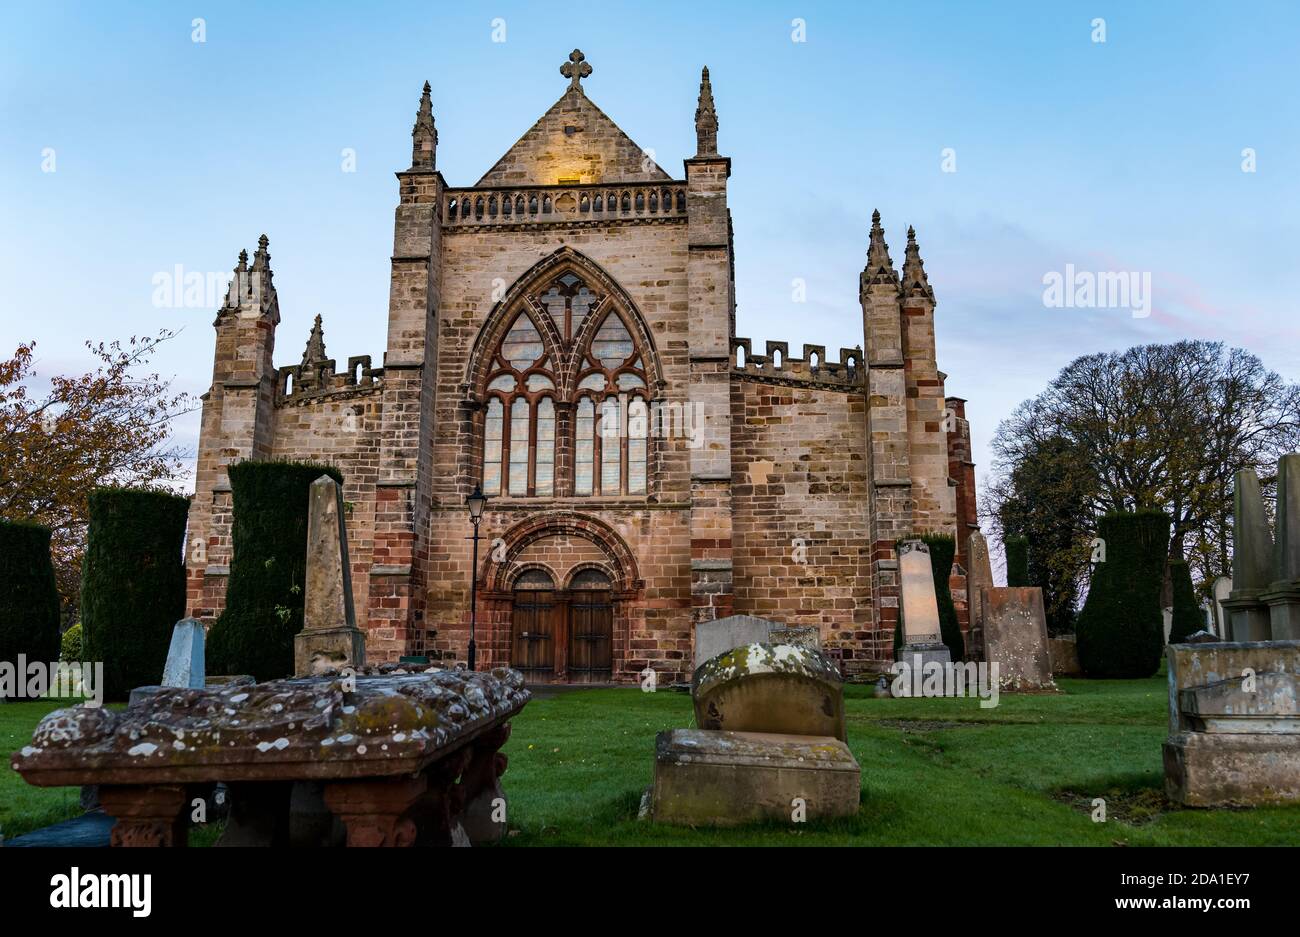 Graves at St Mary's Parish Church graveyard at dusk, Haddington, East Lothian, Scotland, UK Stock Photo